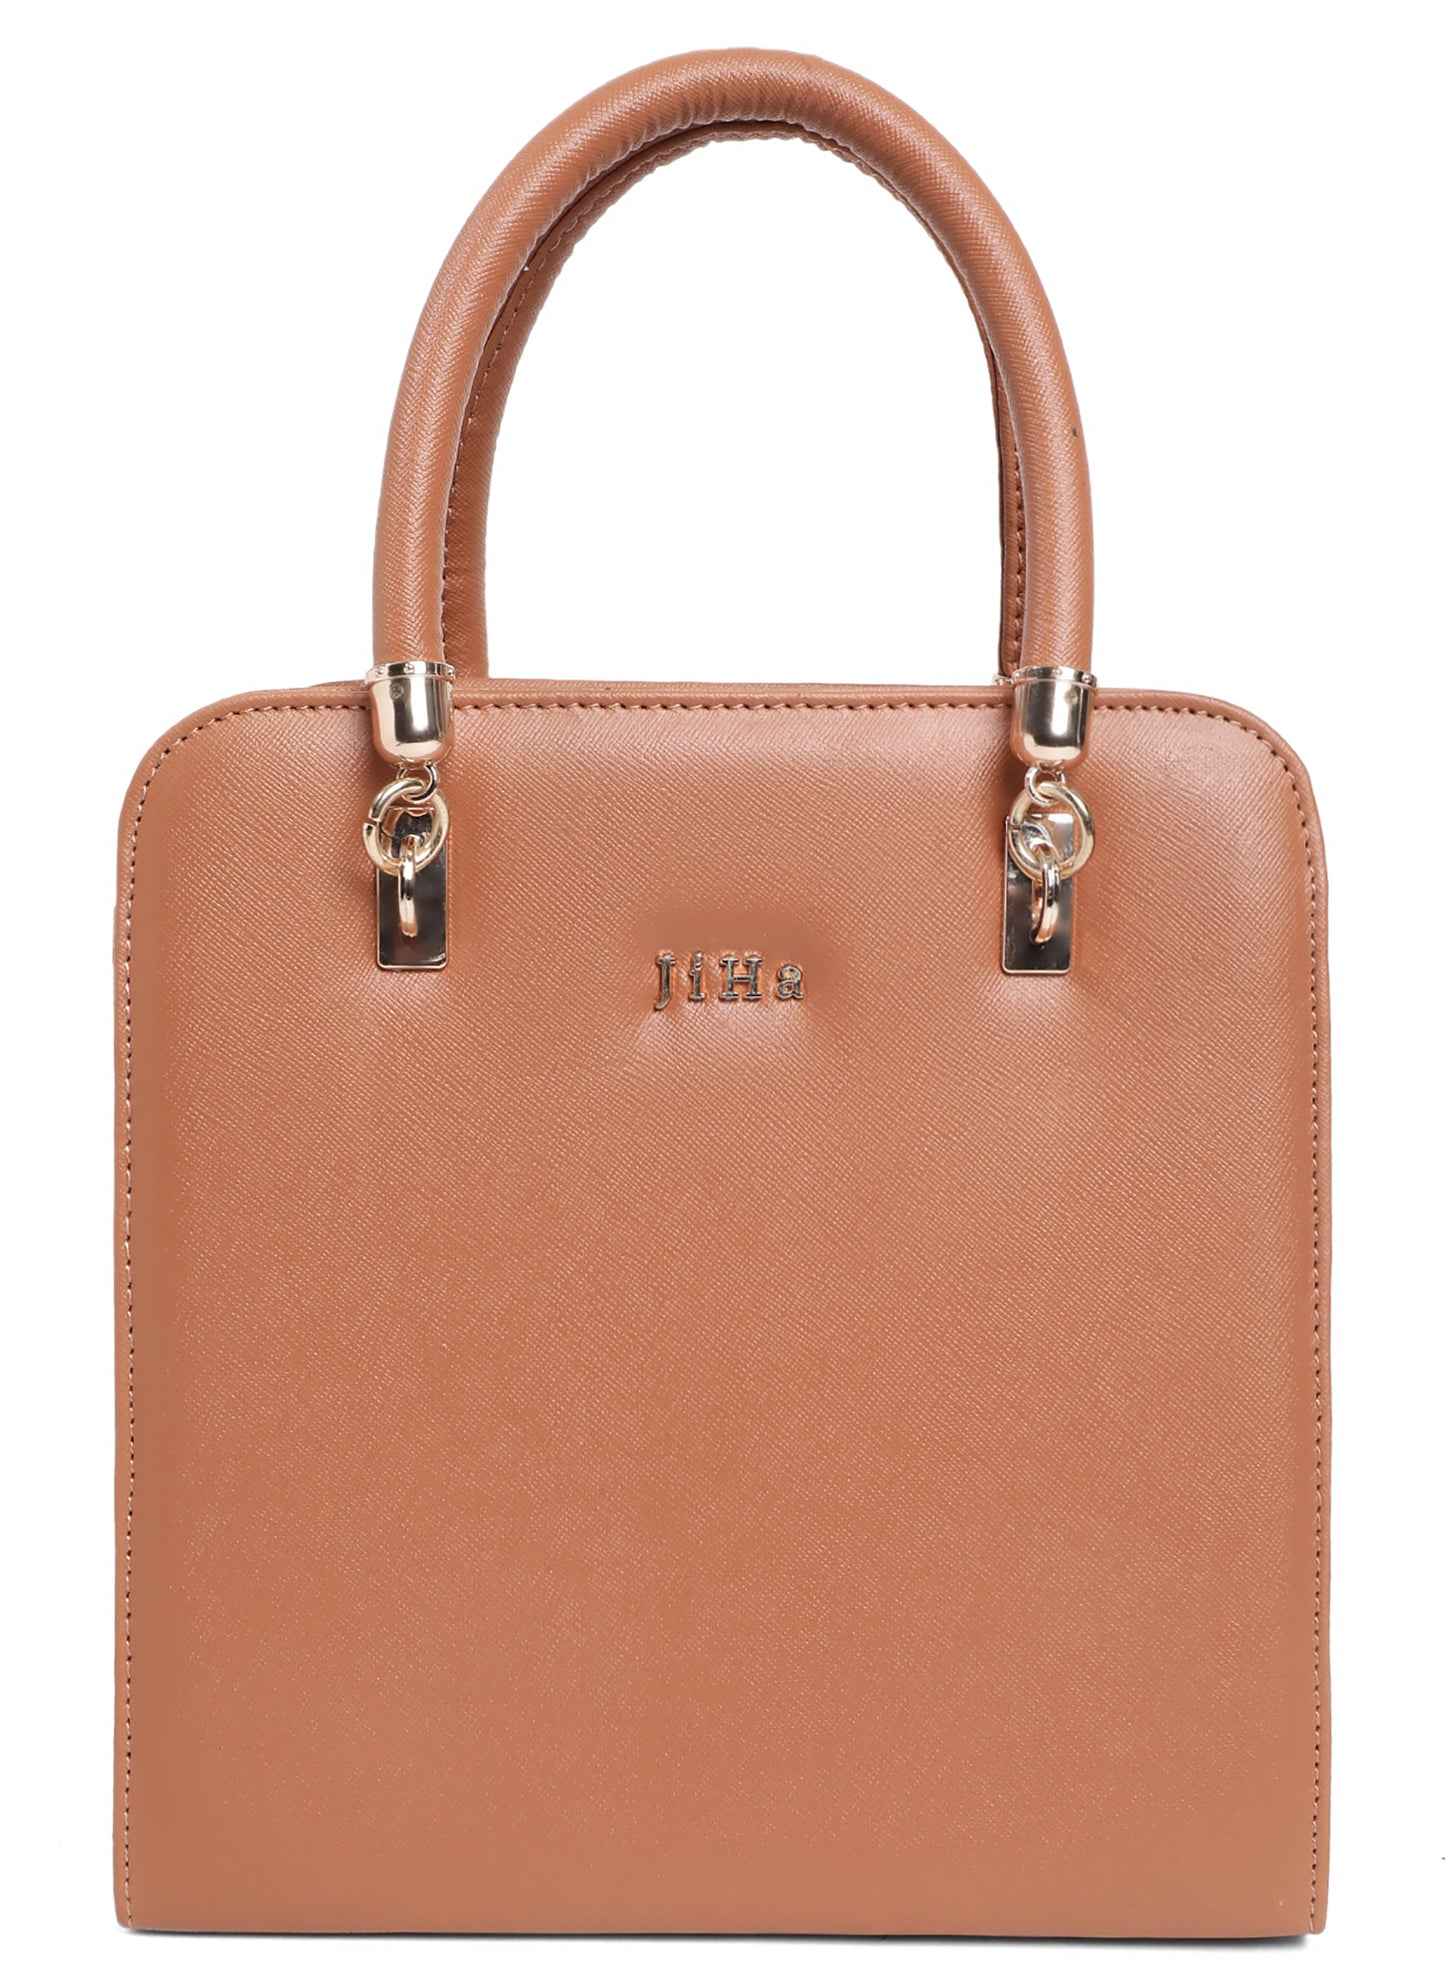 Jiha Faux Leather Tan Box Satchel Hand Bag / Sling Bag